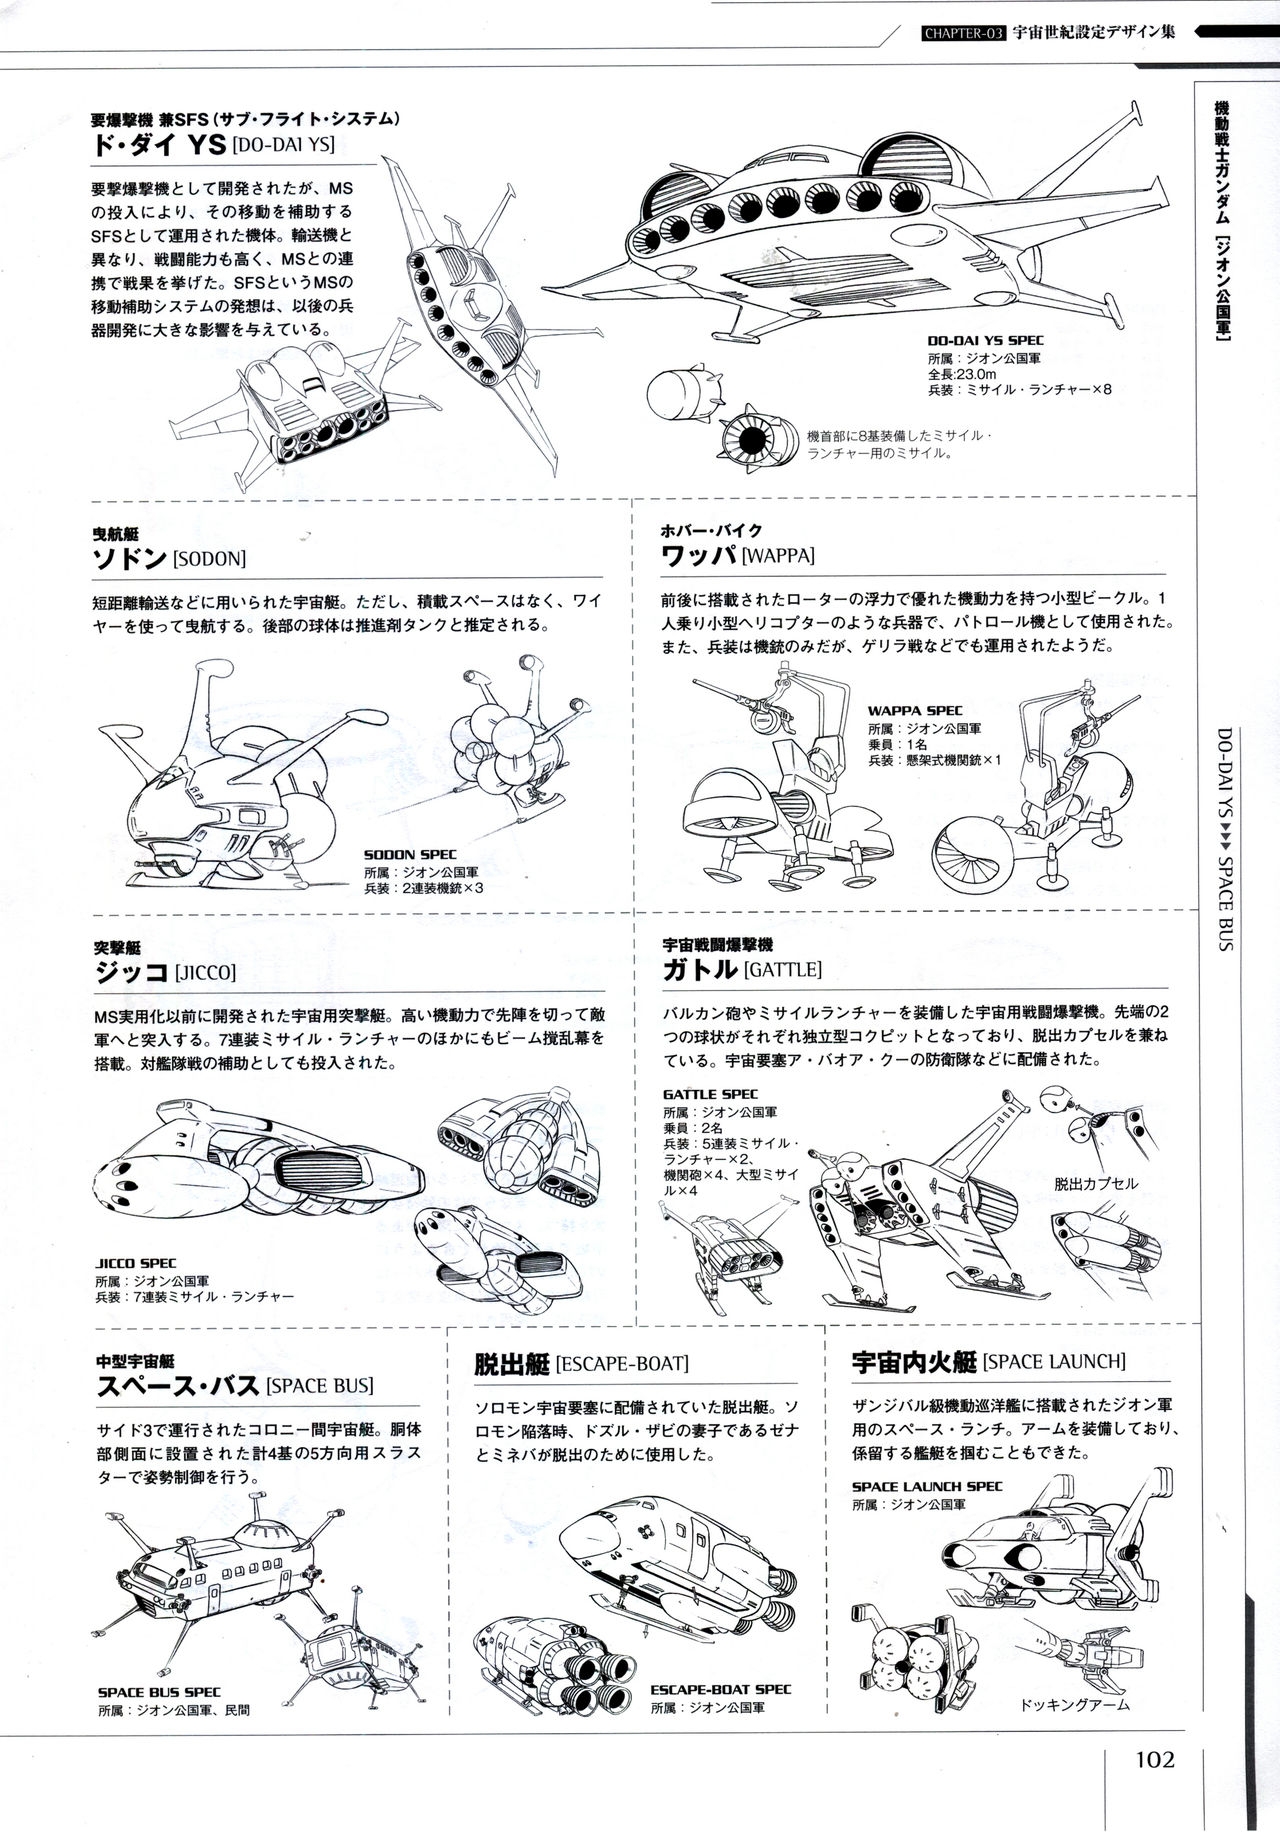 Mobile Suit Gundam - Ship & Aerospace Plane Encyclopedia - Revised Edition 107